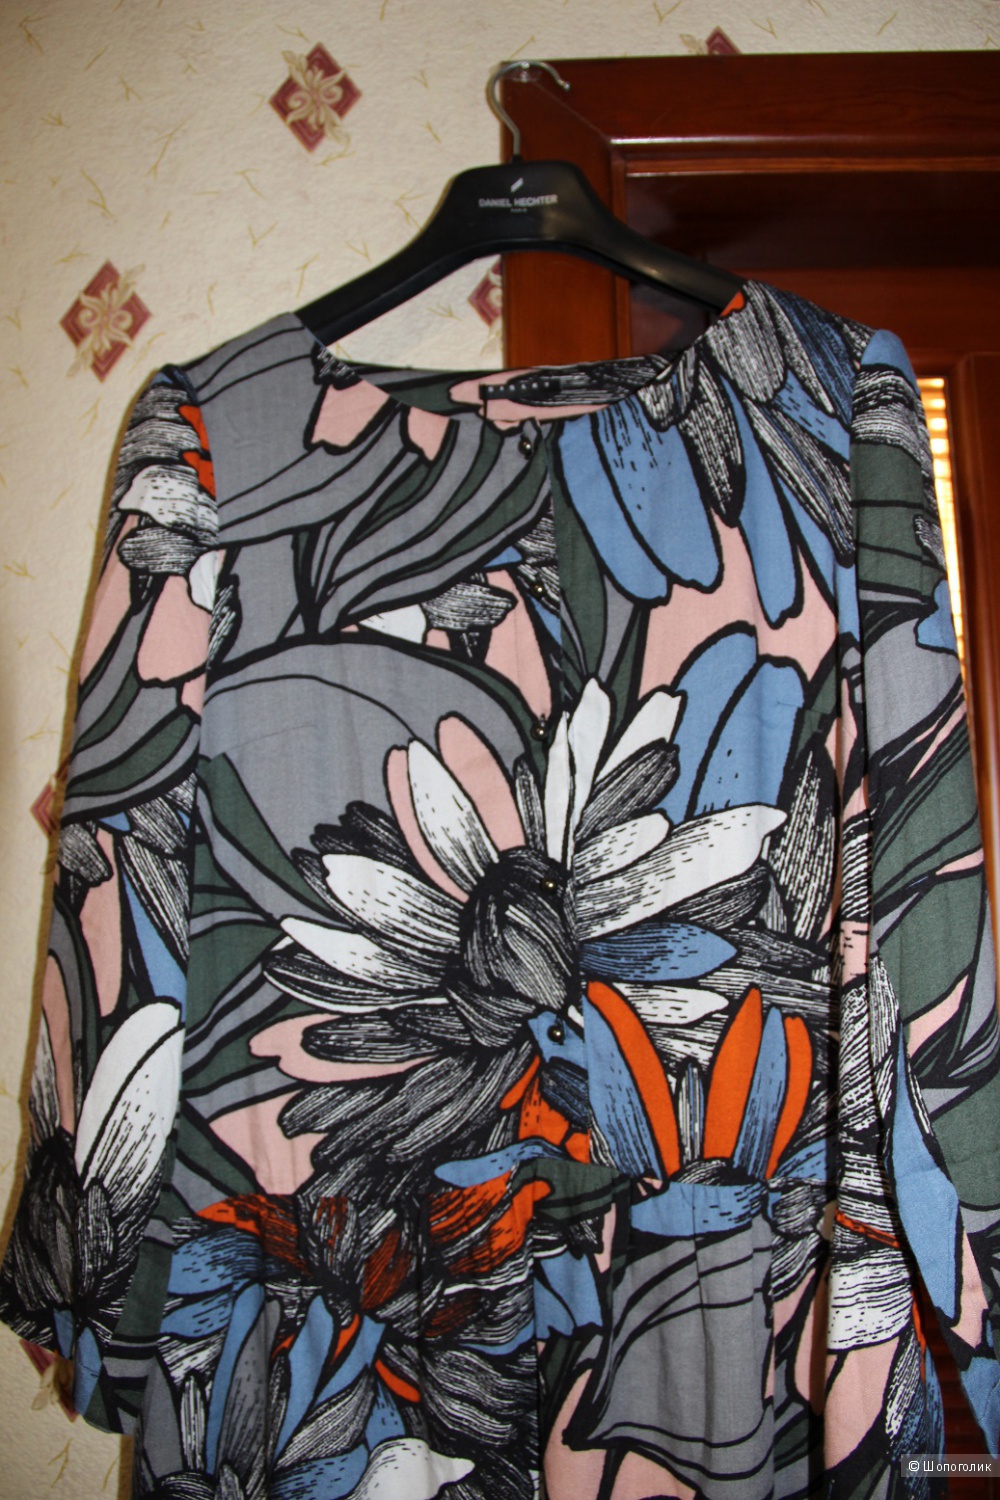 Платье Sisley , фр 44/46 , L ( US ) на наш 48-50